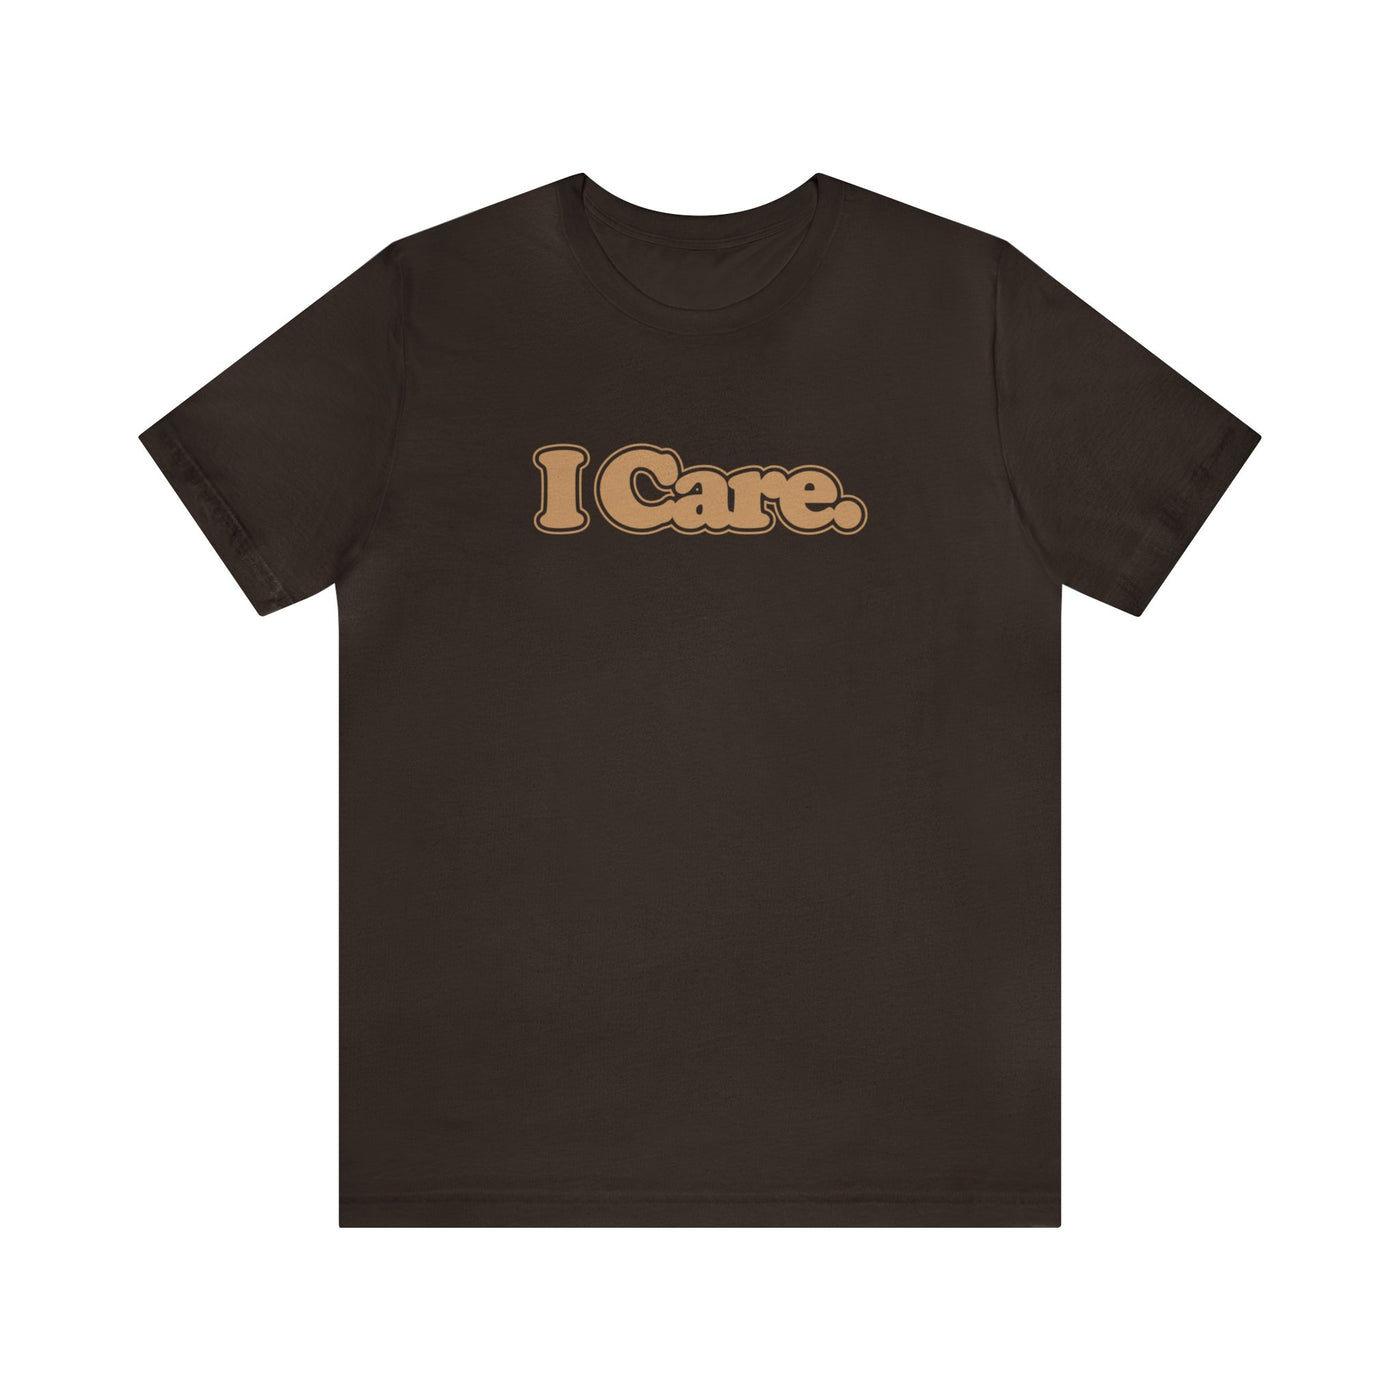 I Care. Short Sleeve Tee